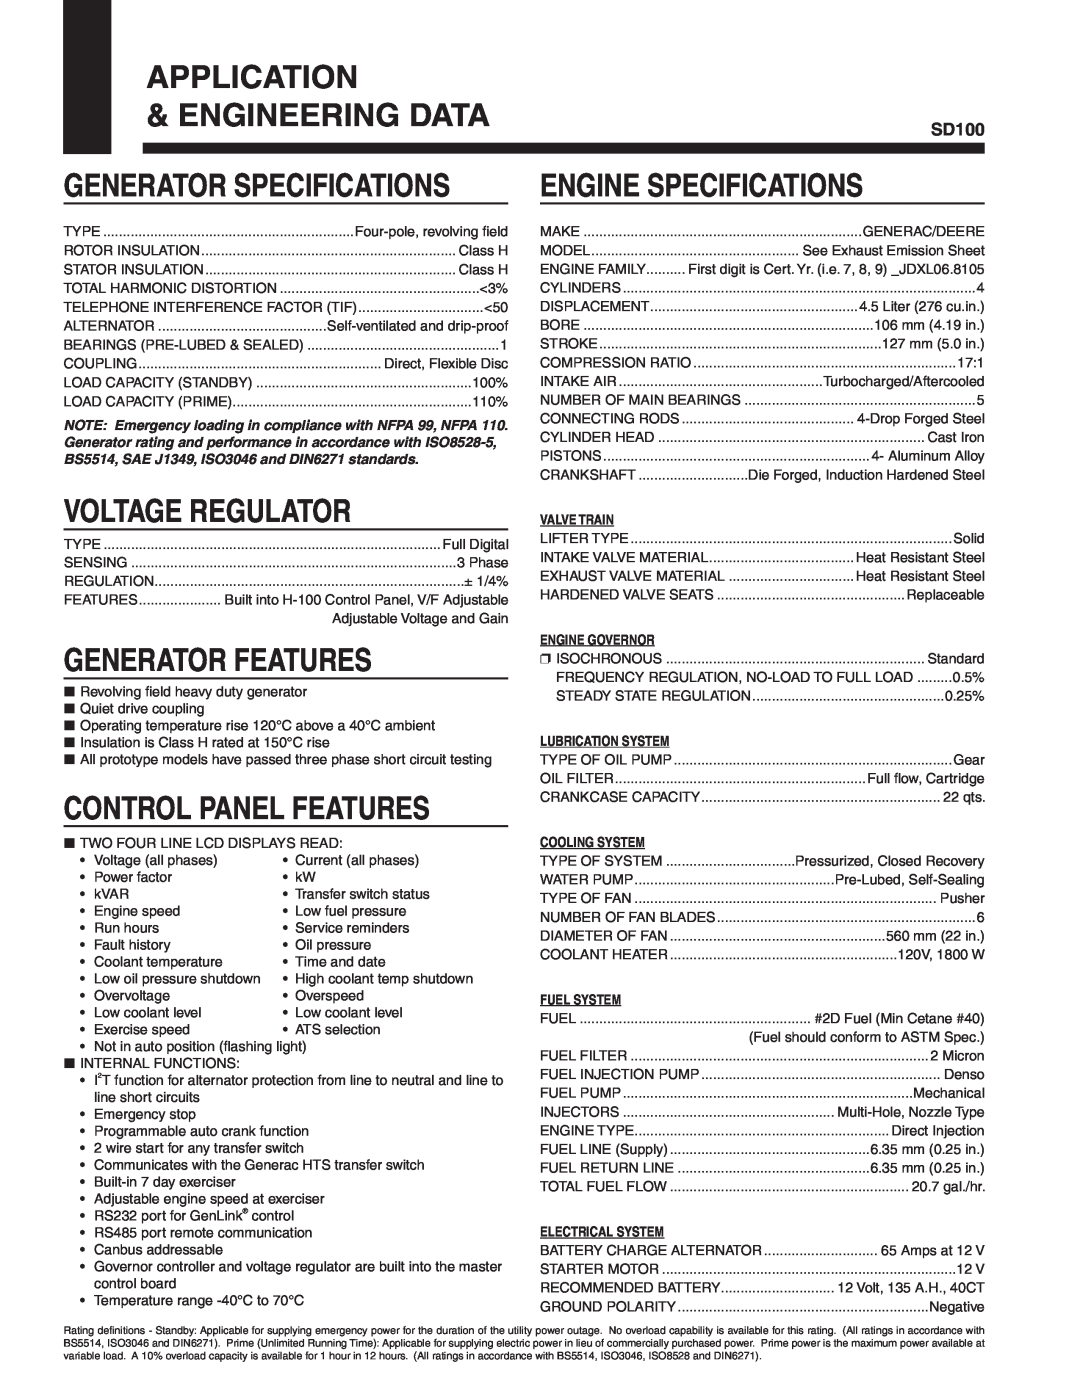 Generac SD100 manual Application, Engineering Data, Engine Specifications, Voltage Regulator, Generator Features 